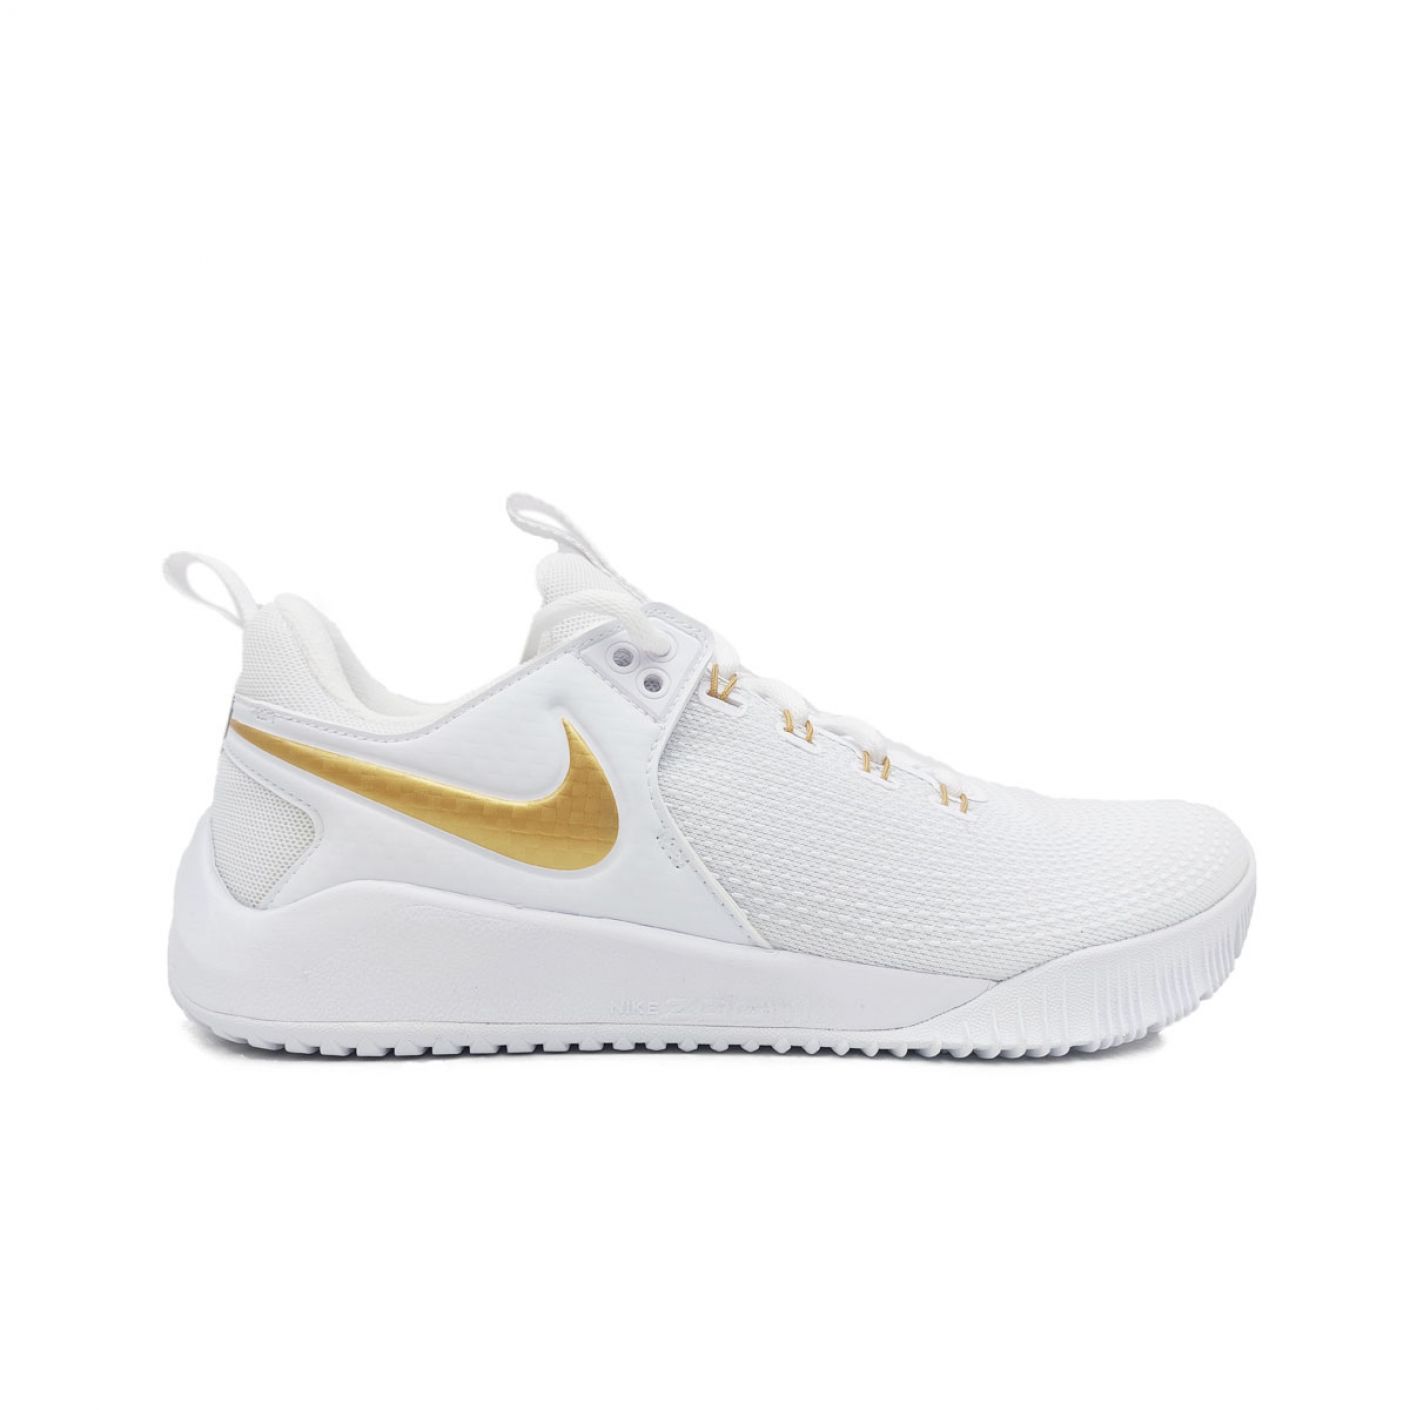 Nike Air Zoom Hyperace 2 SE White/Gold